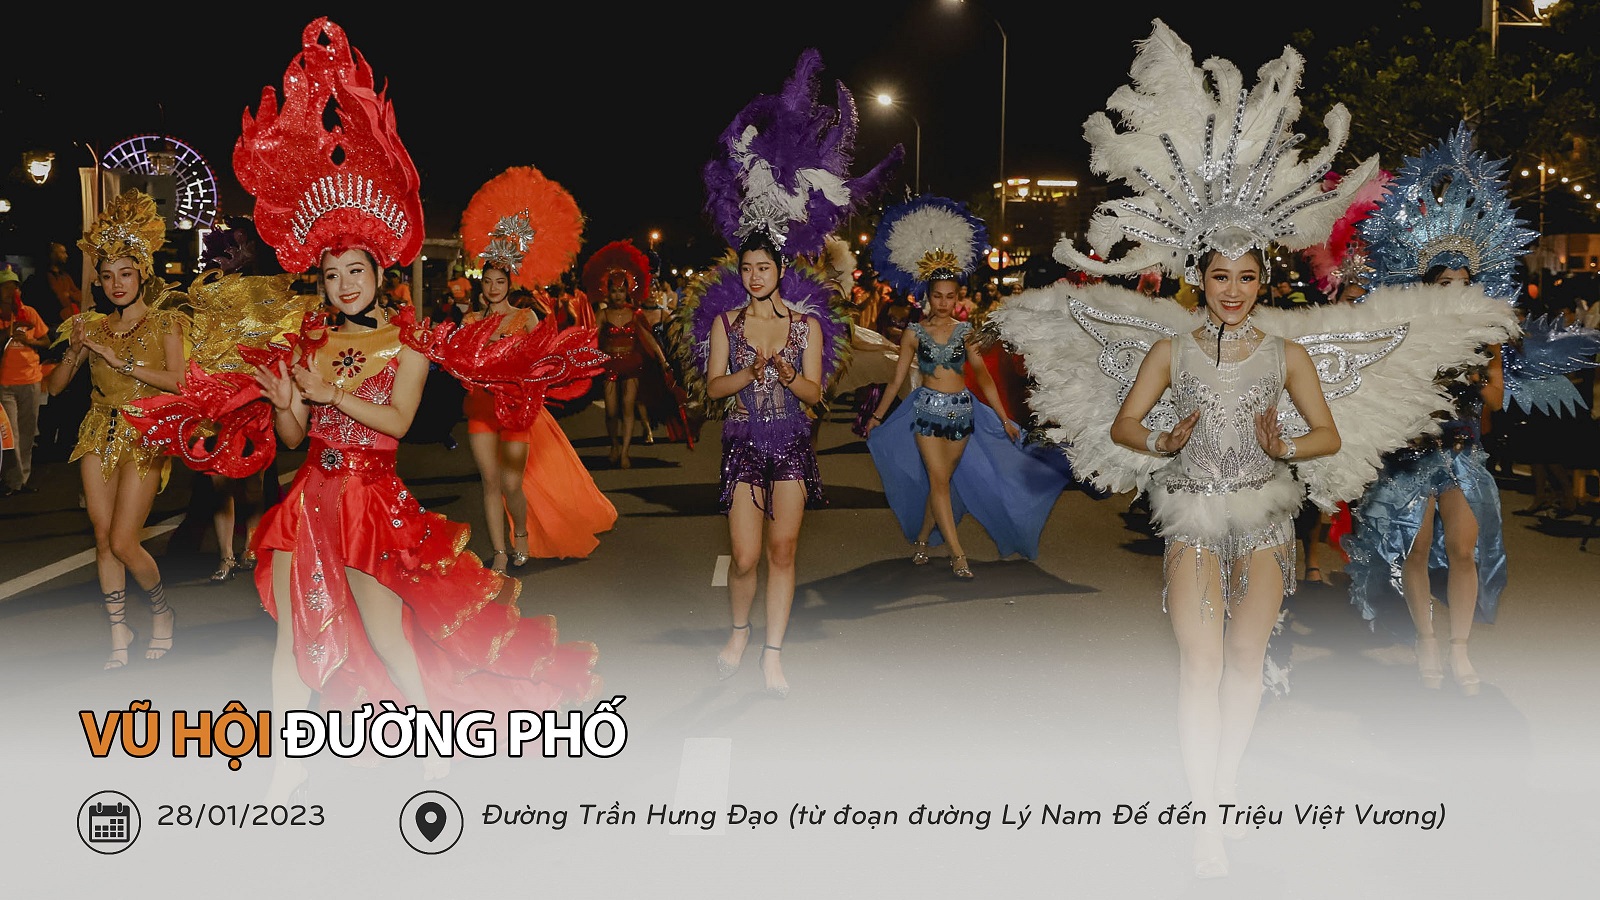 4 Vu Hoi Duong Pho Danang